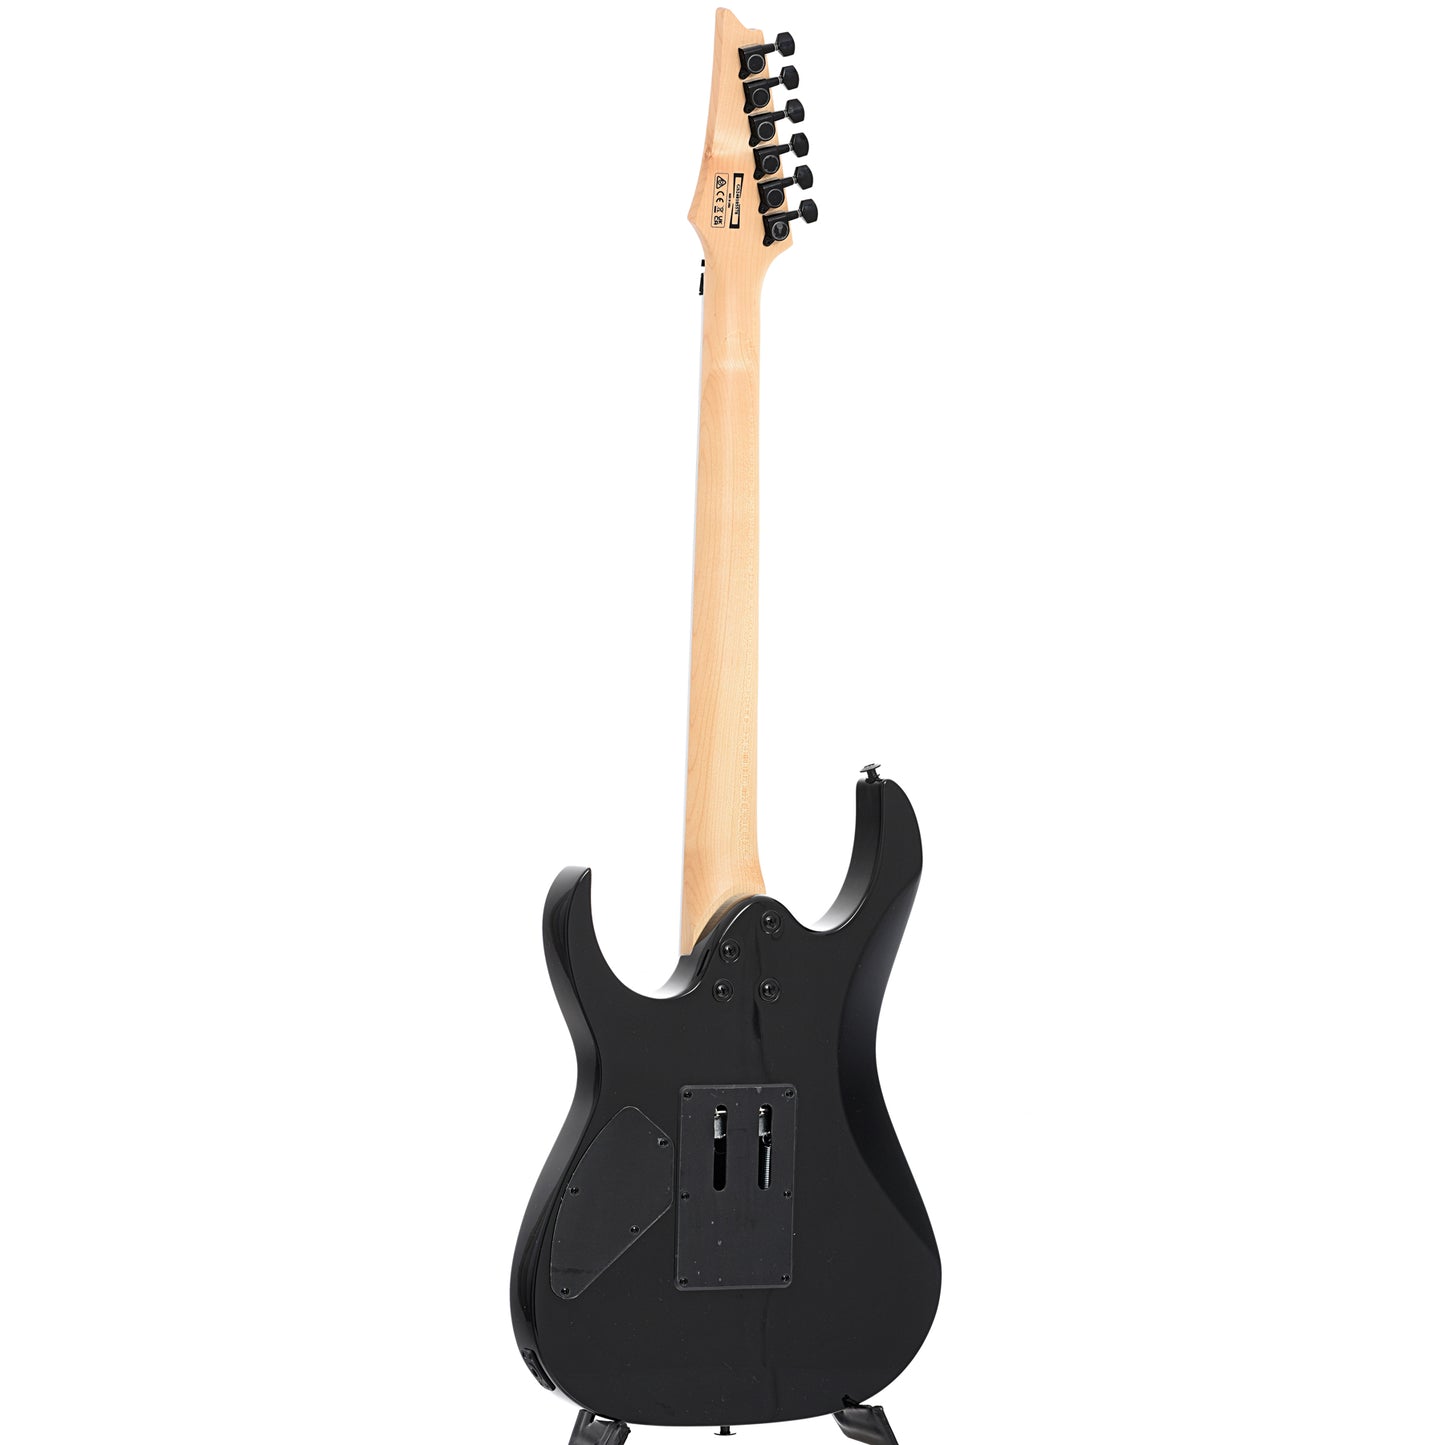 Full back and side of Ibanez Gio GRG320FA Electric Guitar, Transparent Black Sunburst